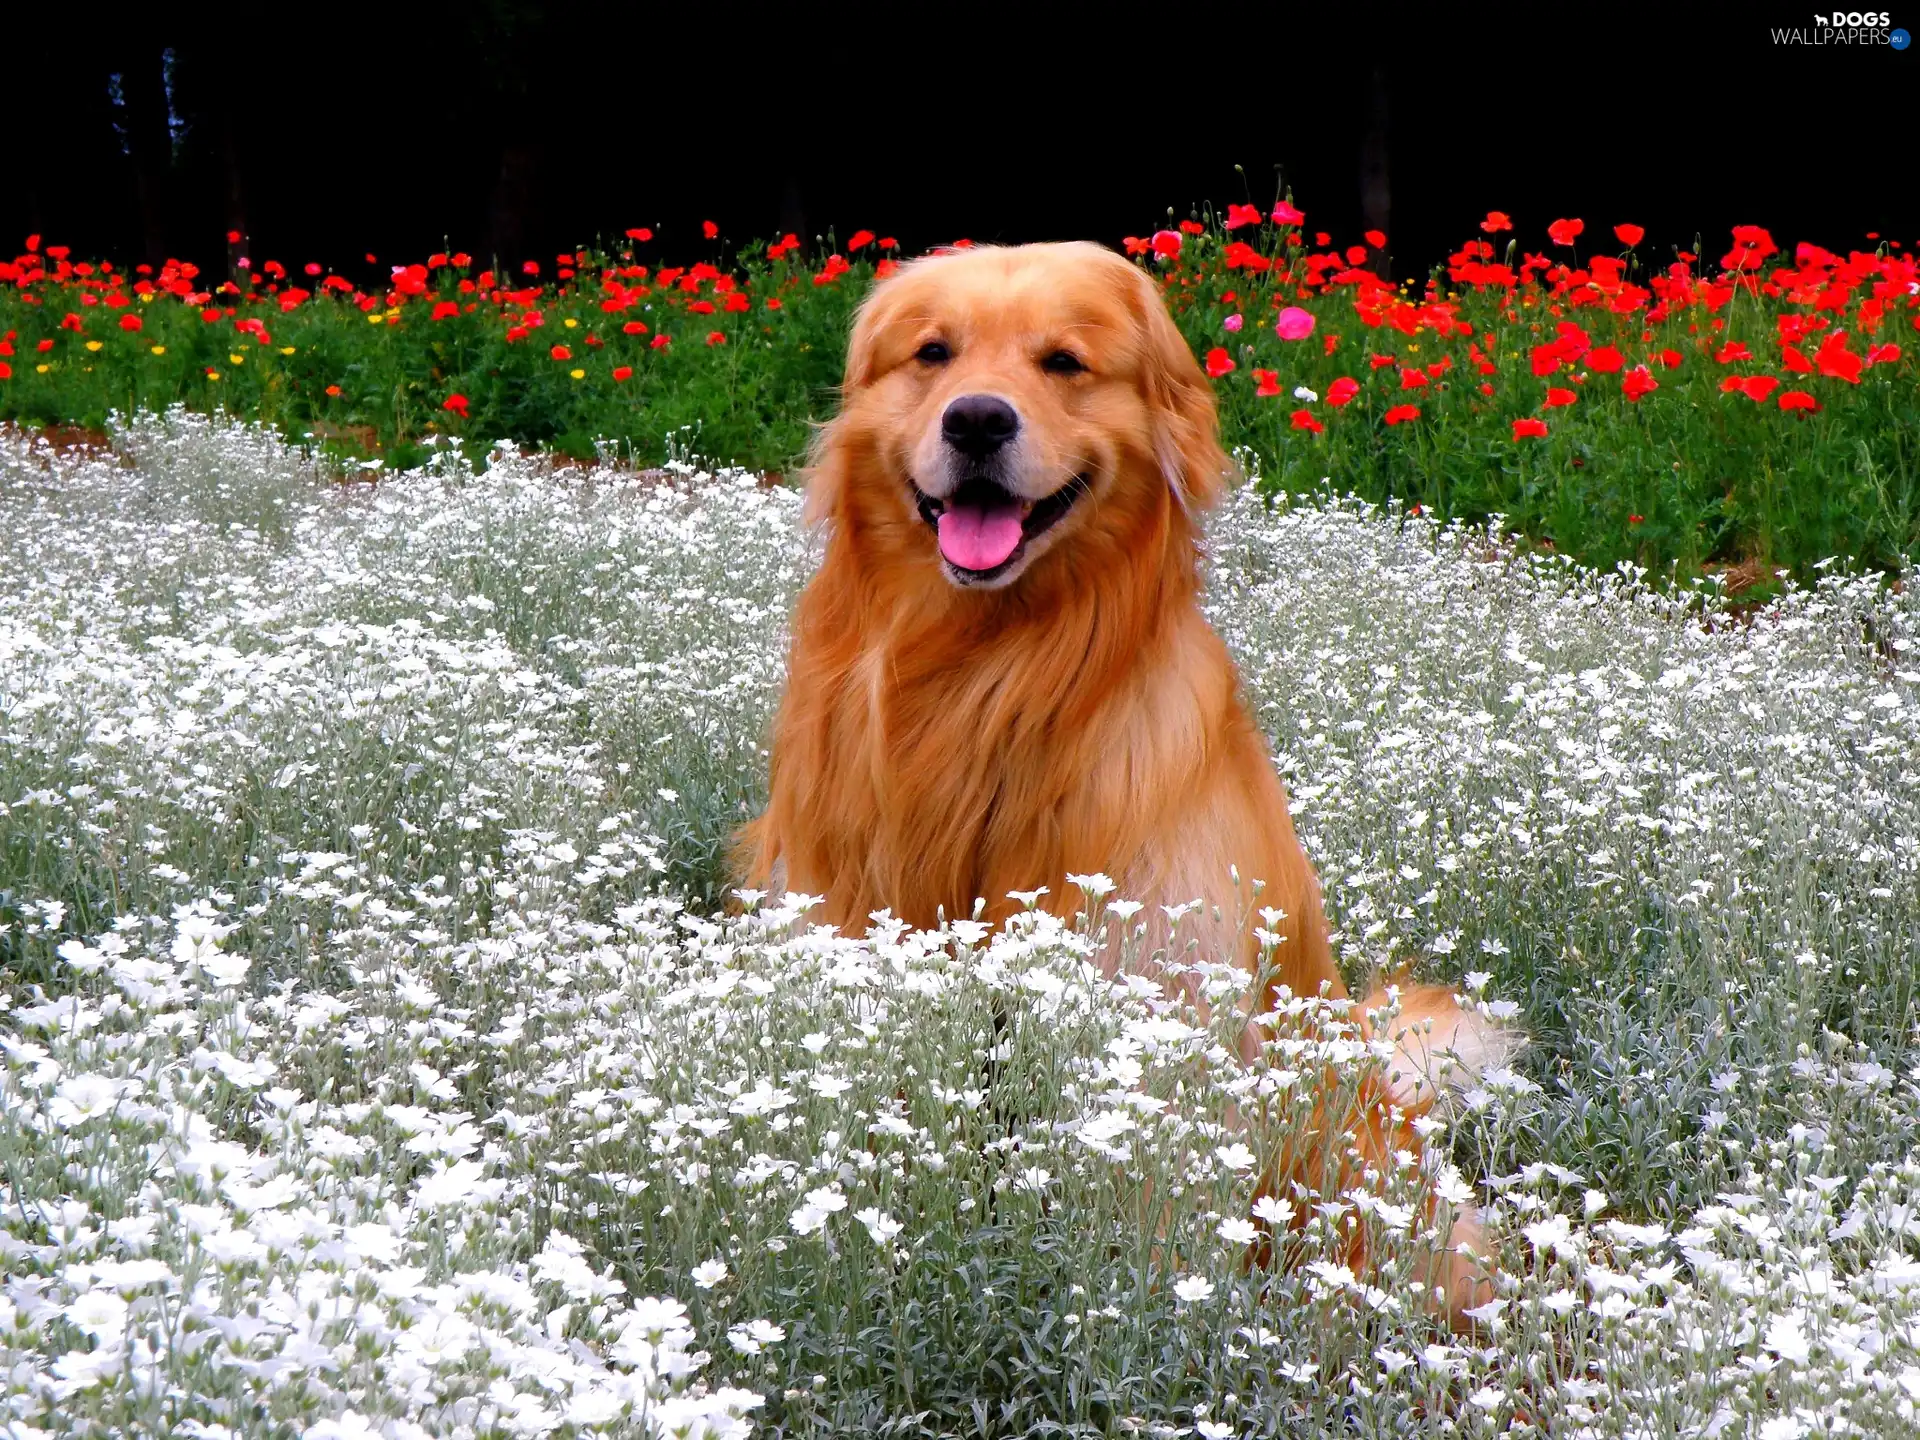 Flowers, retriever, dog, golden